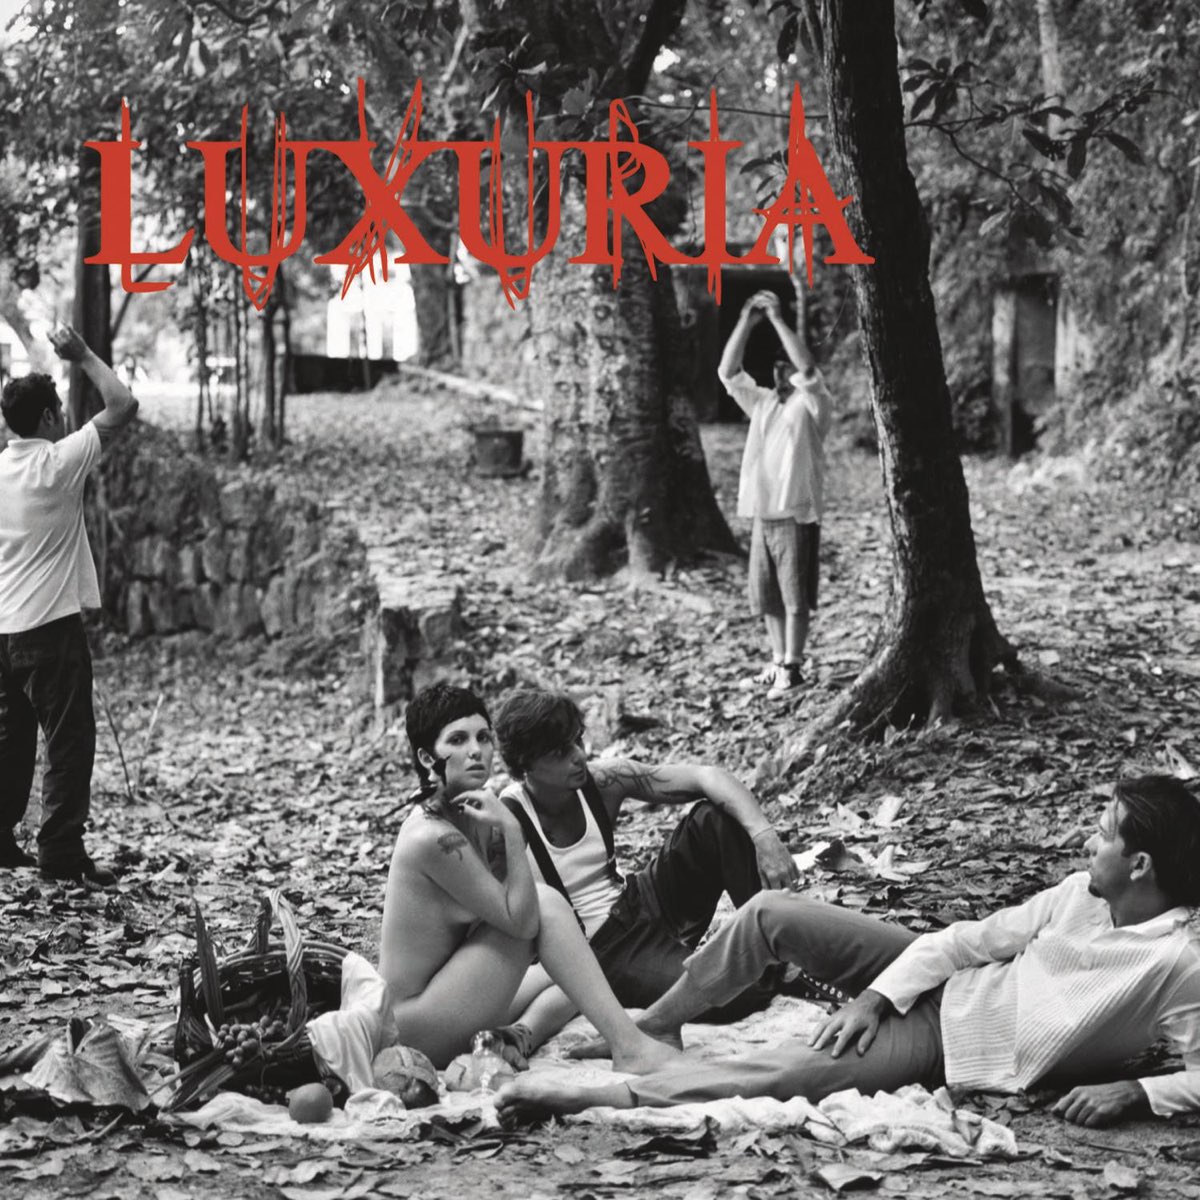 Luxúria — Imperecível cover artwork